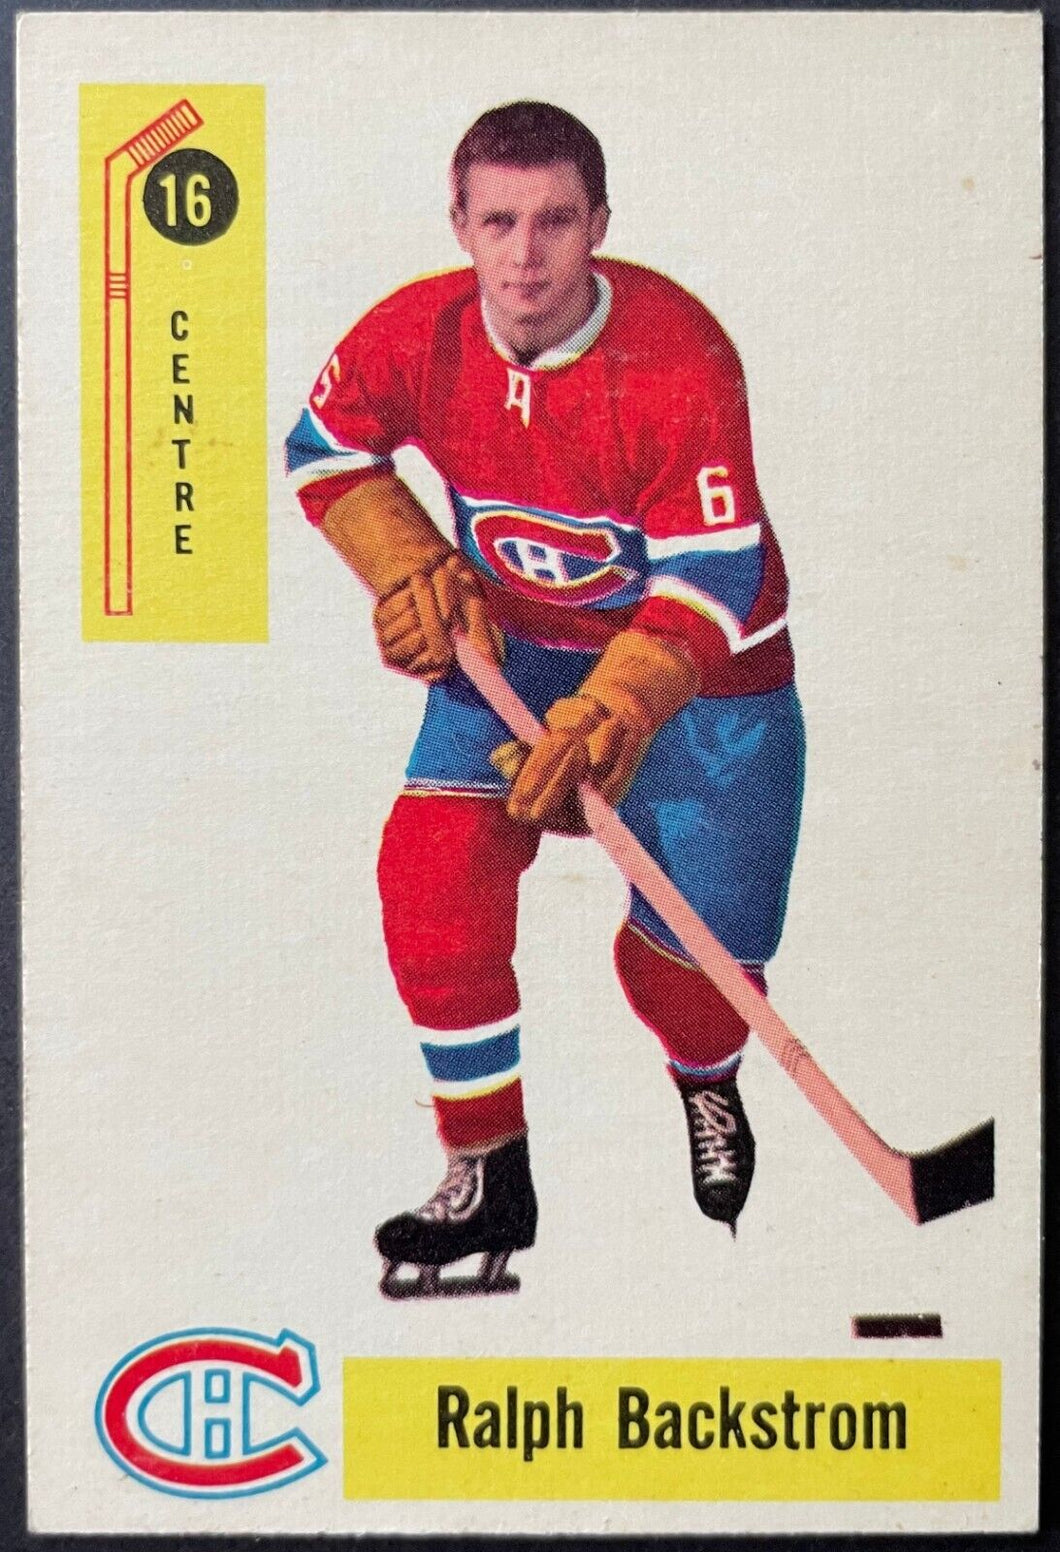 1958-59 Parkhurst Hockey Card #16 Ralph Backstrom Montreal Canadiens Vintage NHL